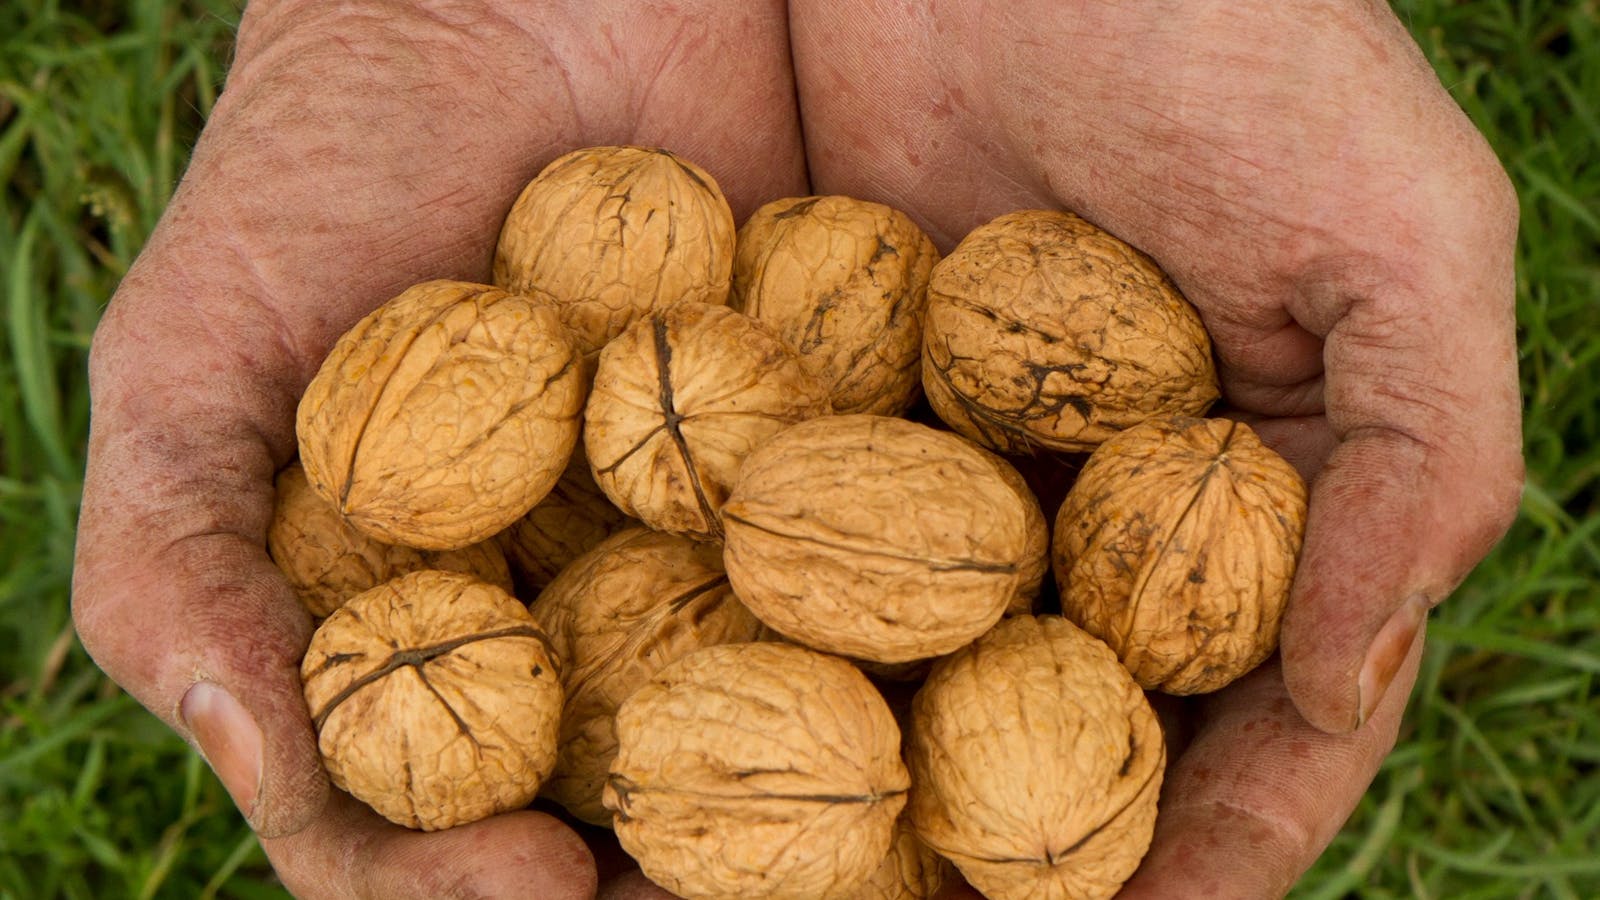 Some of the award-winning walnuts grown at Coaldale Walnuts.